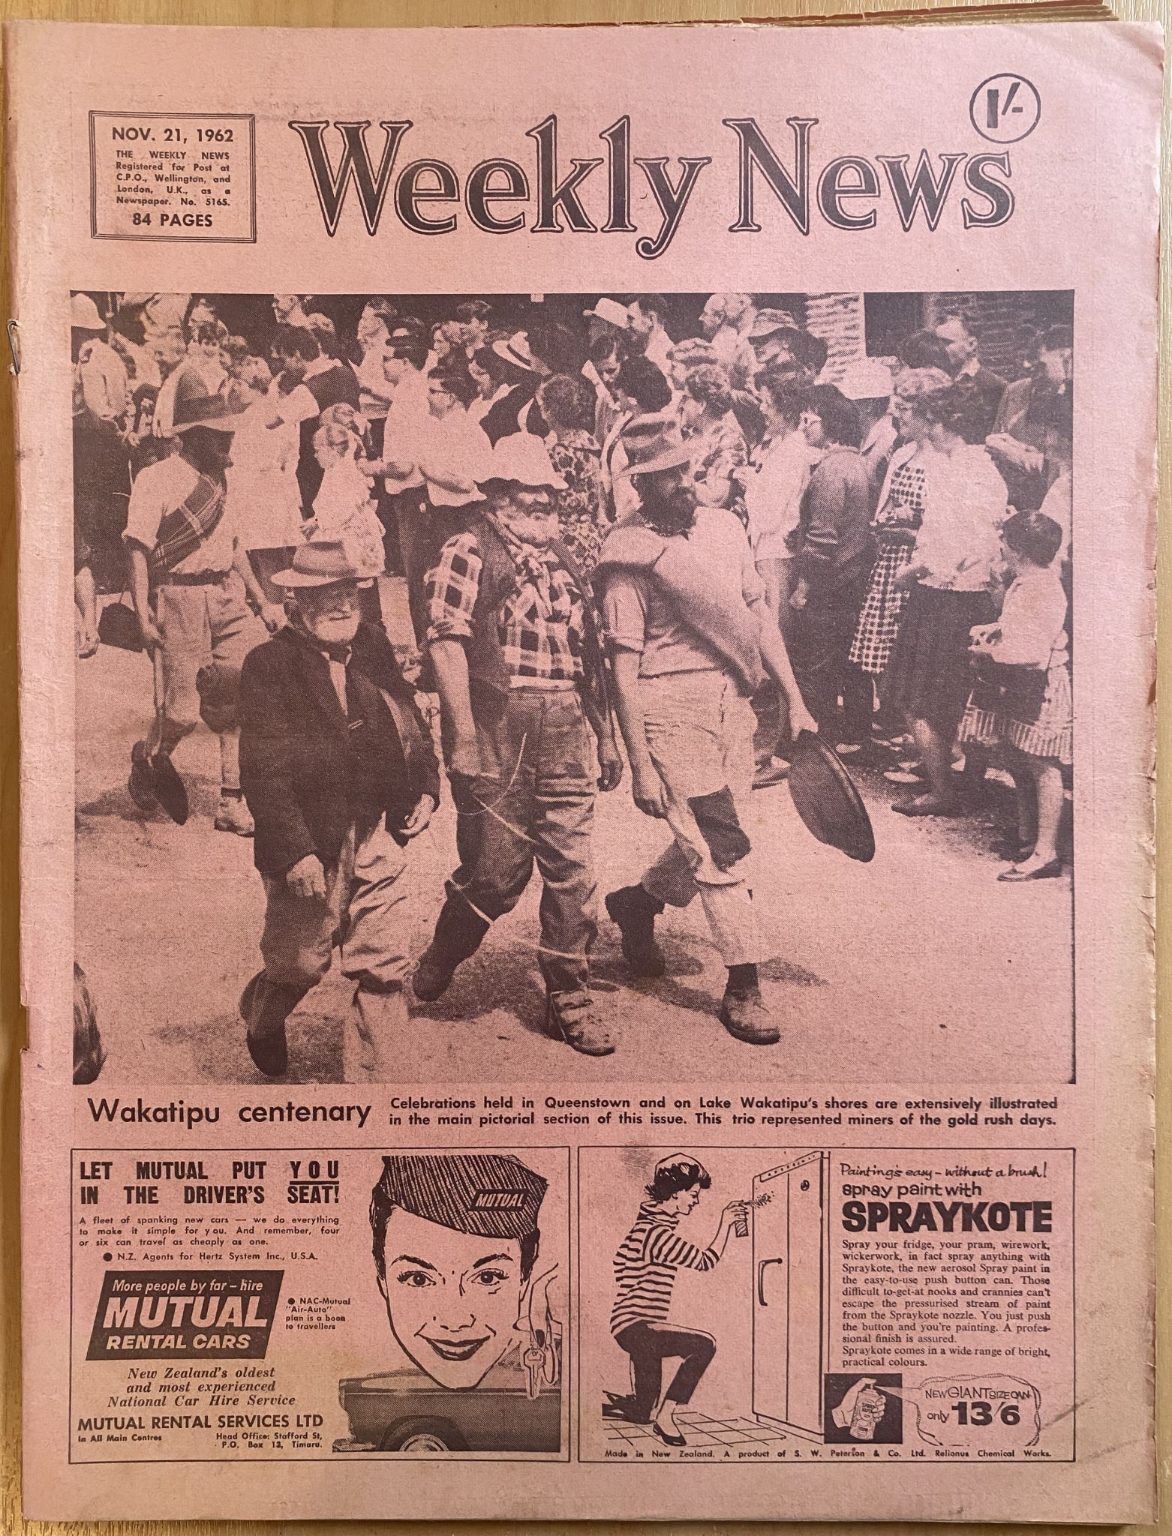 OLD NEWSPAPER: The Weekly News, No. 5165, 21 November 1962